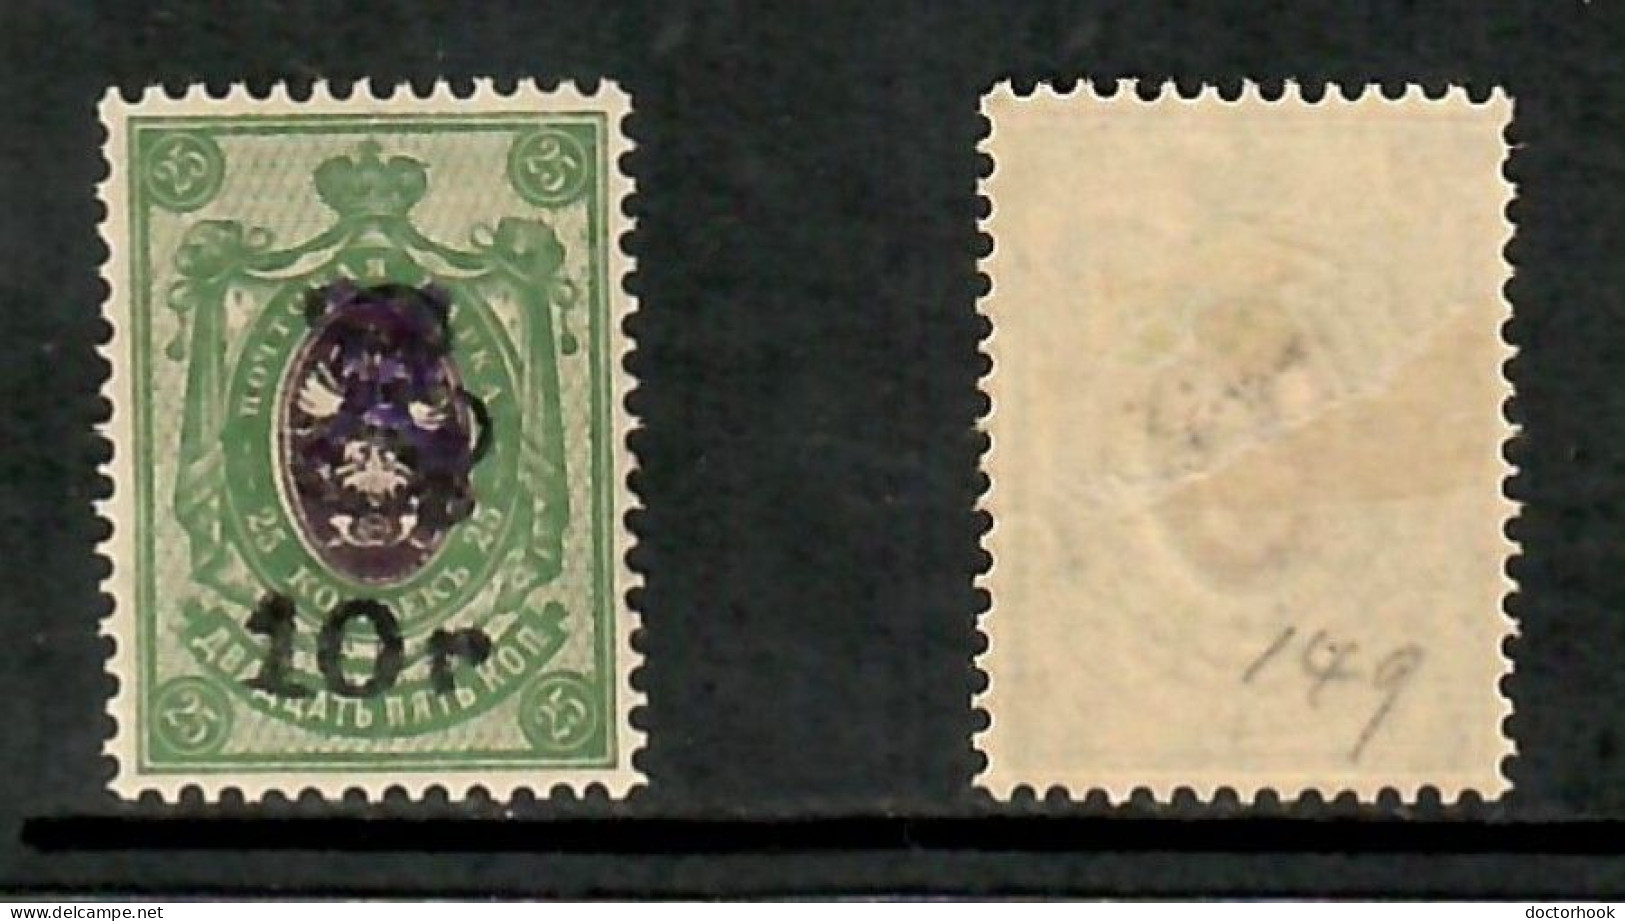 ARMENIA    Scott # 148A* MINT LH (CONDITION PER SCAN) (Stamp Scan # 1044-6) - Armenia